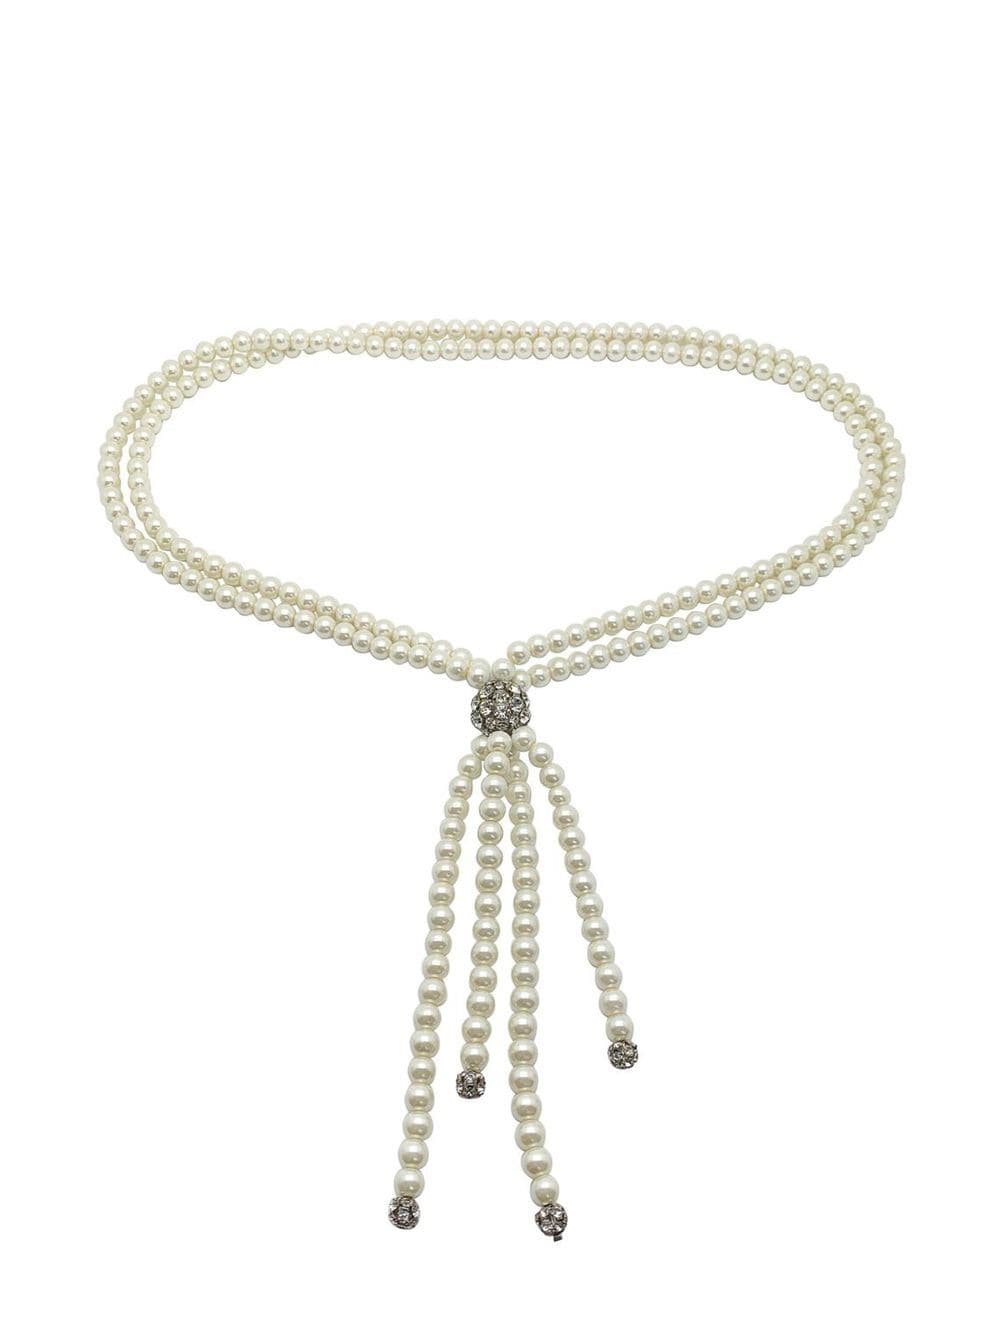 Jennifer Gibson Vintage pearl and crystal tassel sautoir necklace 1980s - METALLIC